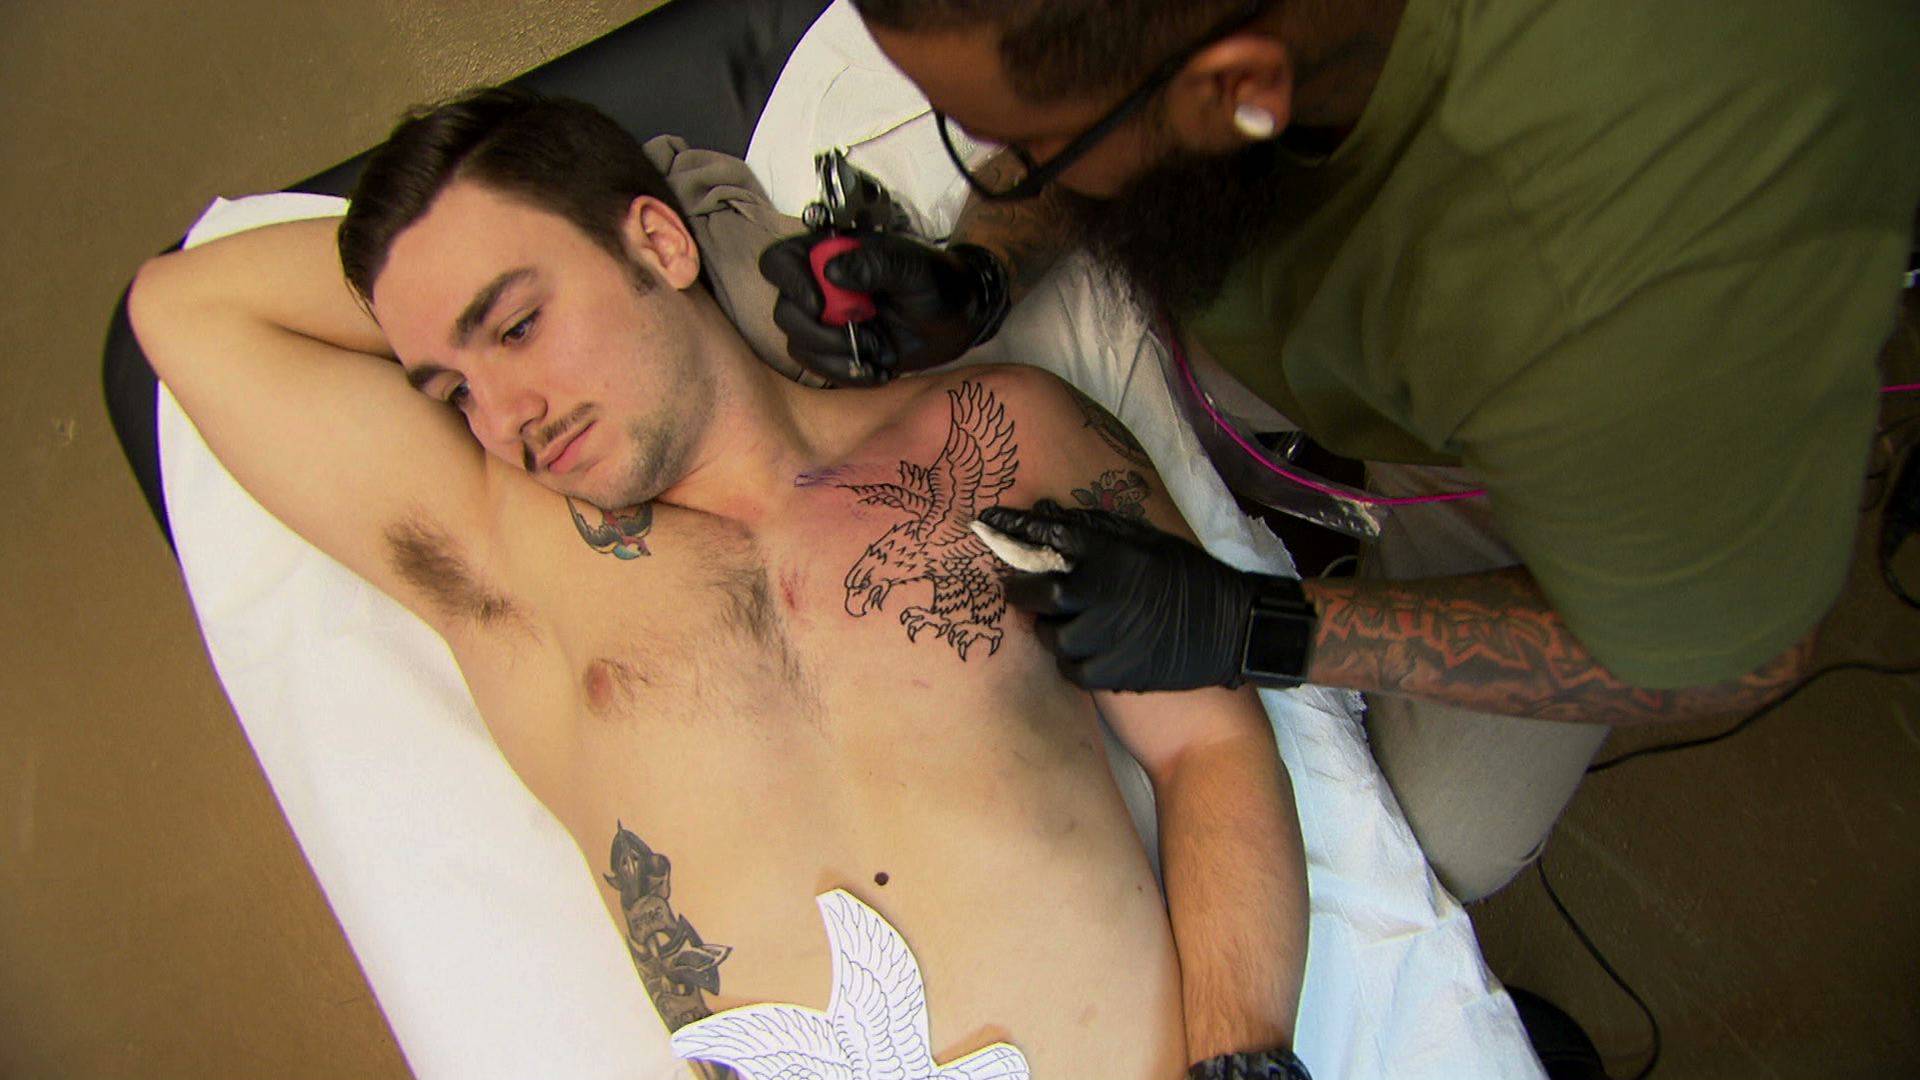 deangelo williams ink master tattoo